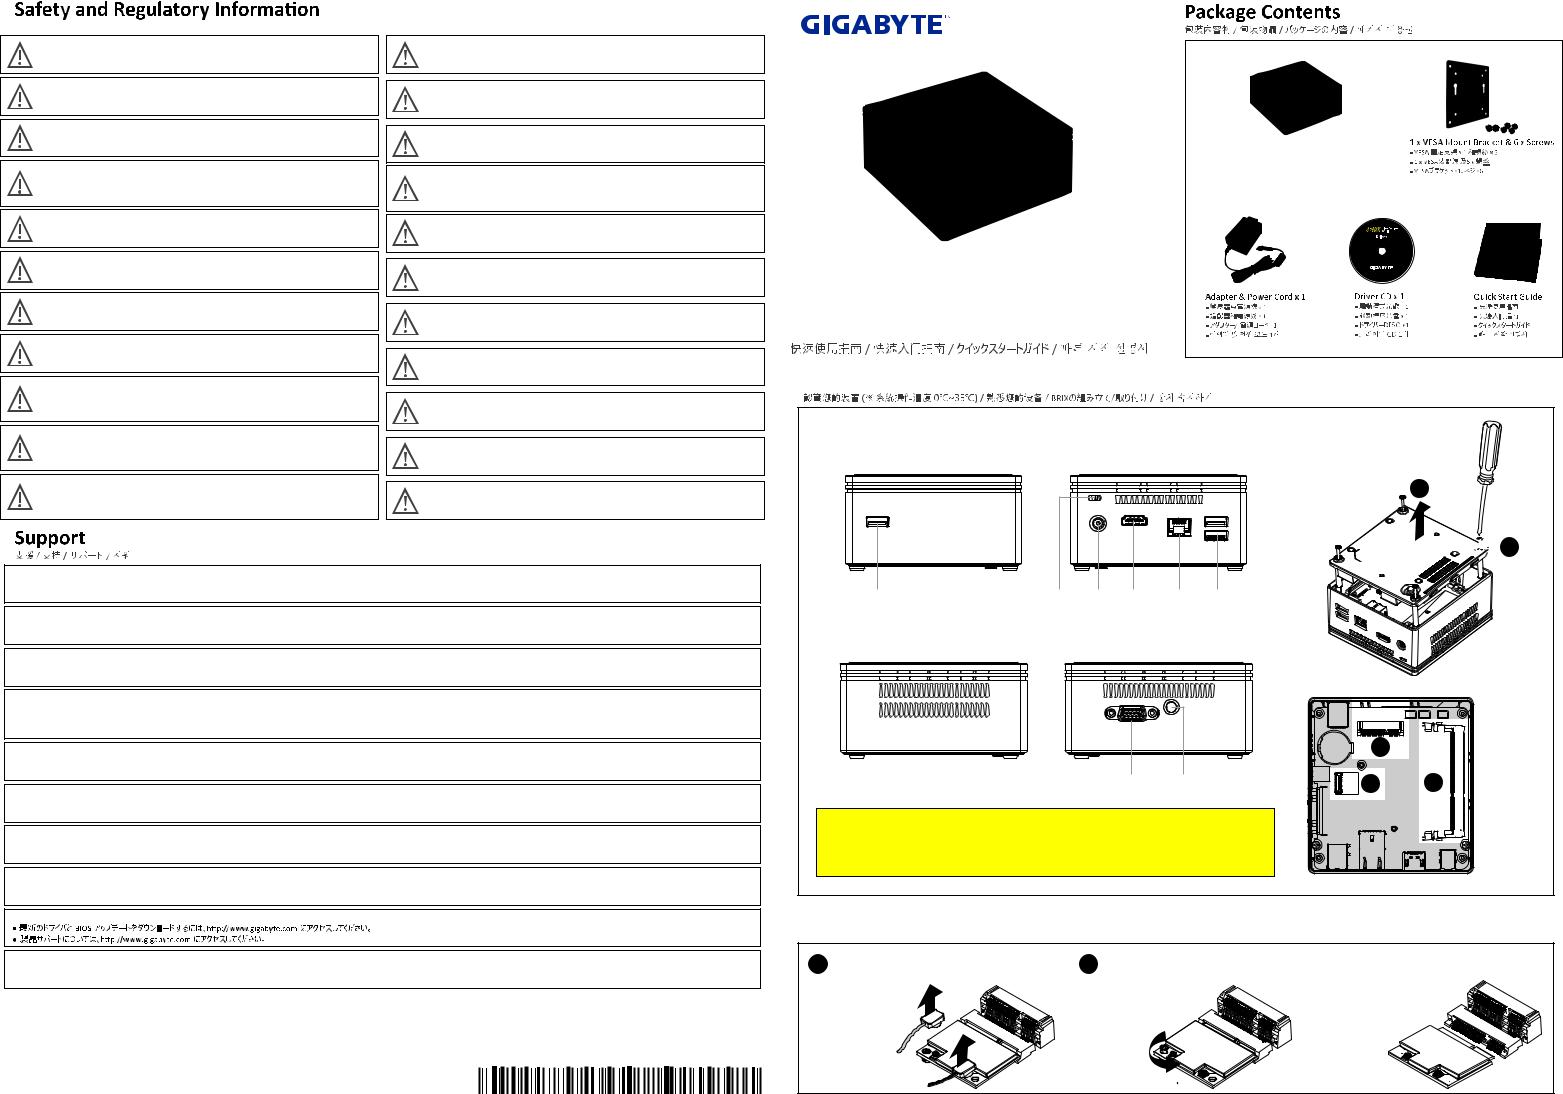 Gigabyte GB-BXBT-2807 Manual